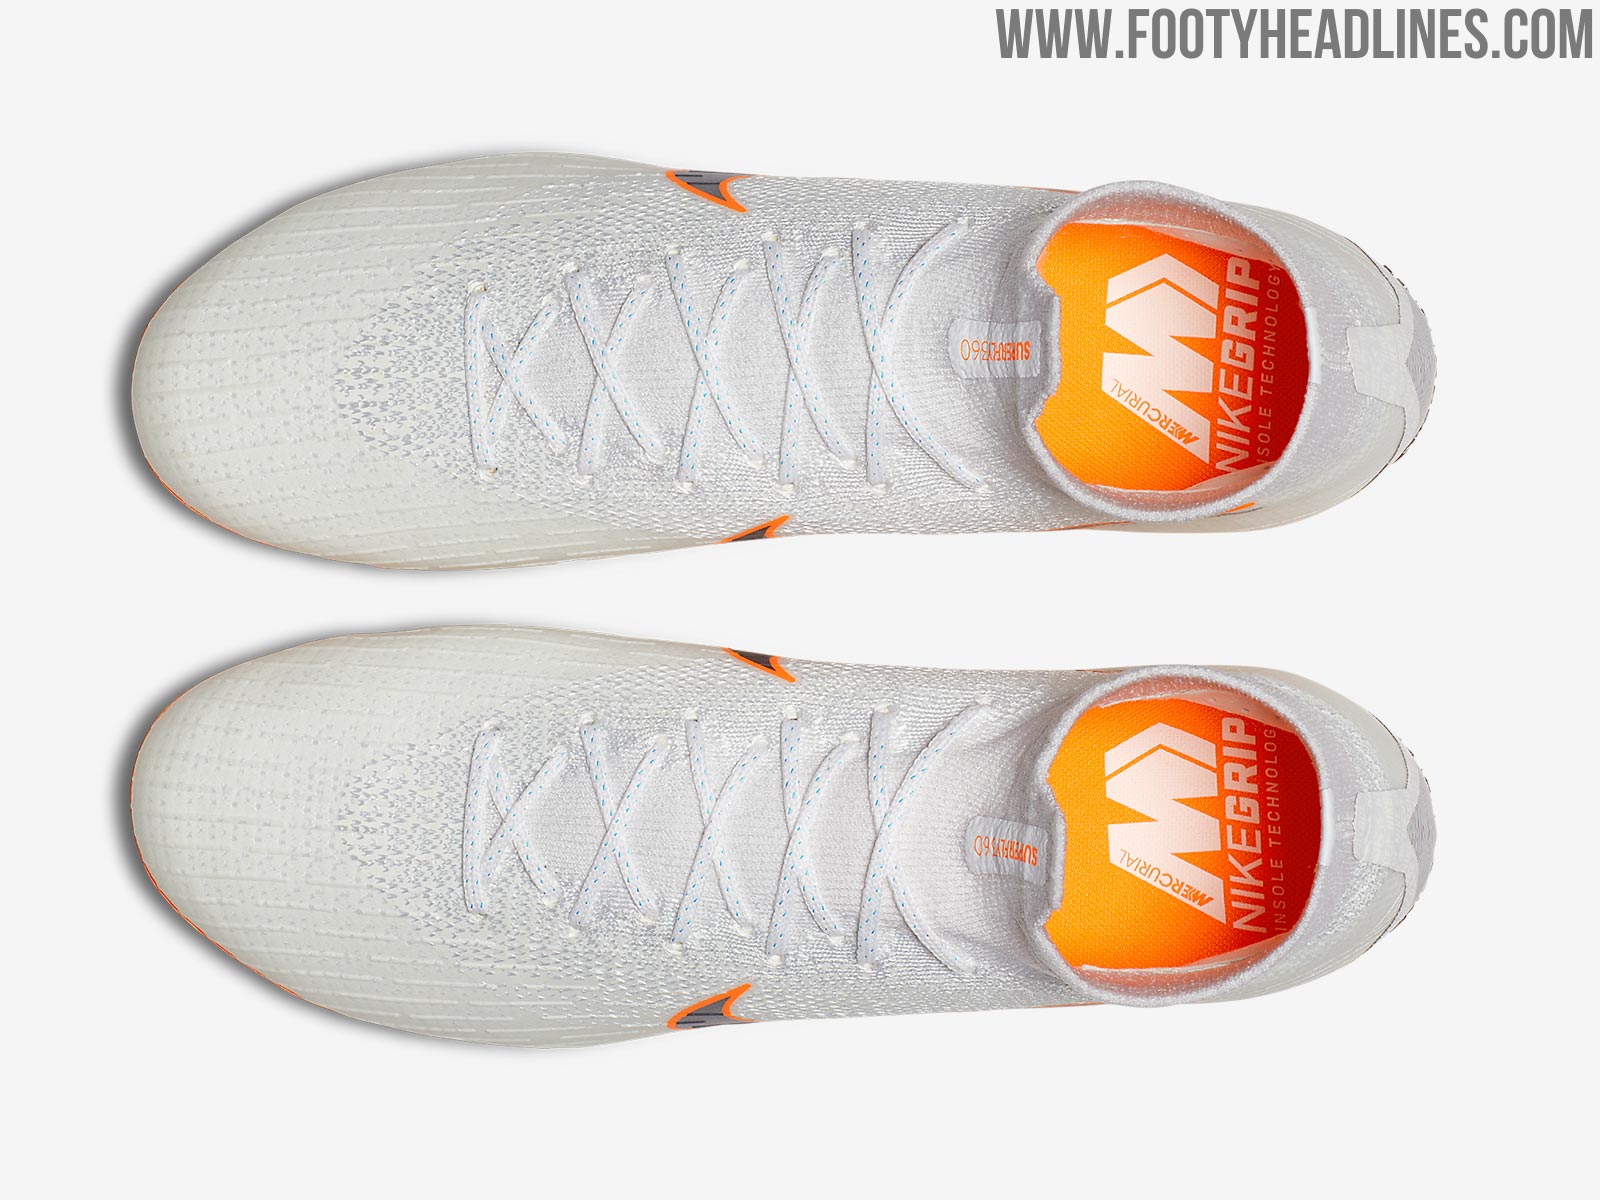 Nike Mercurial Superfly VI 360 2018 Boots Revealed - Footy Headlines